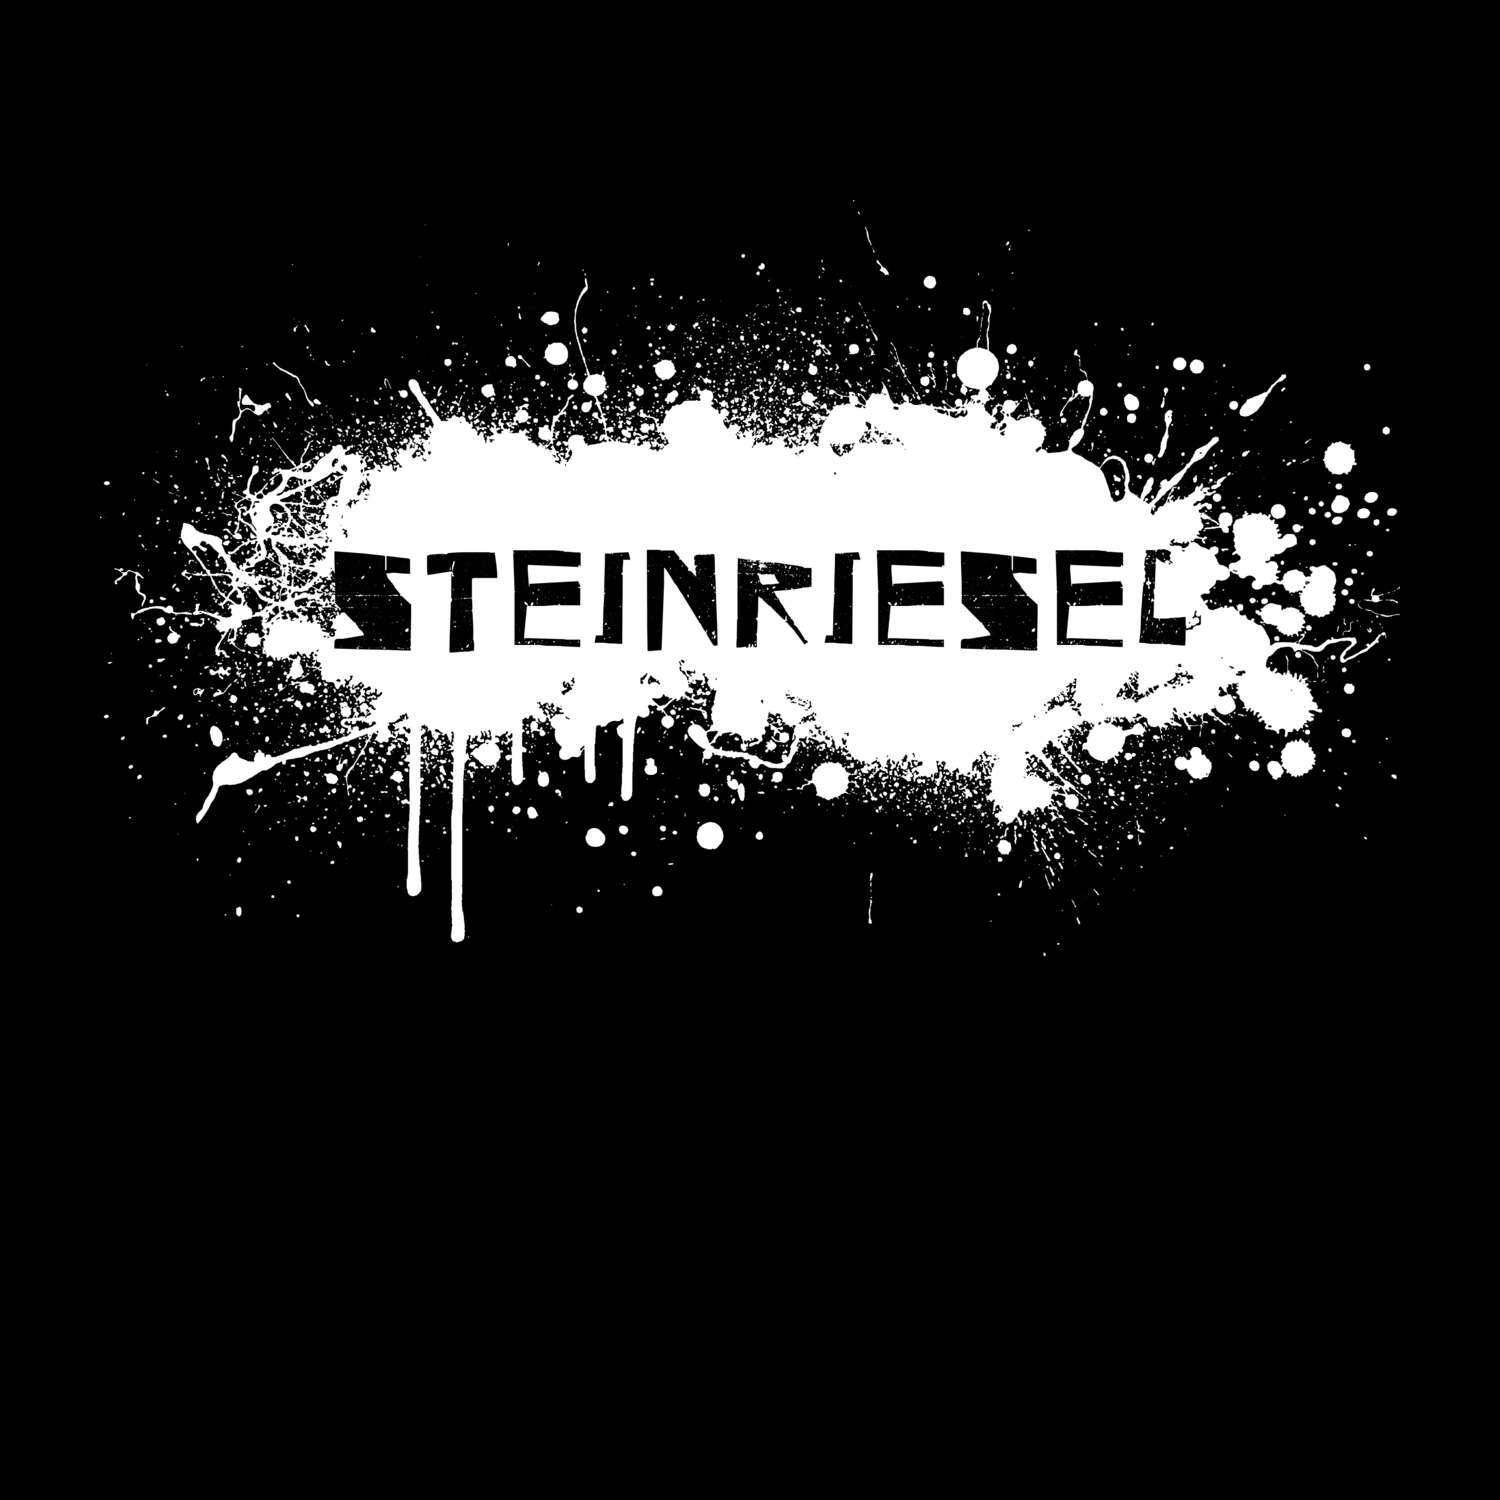 Steinriesel T-Shirt »Paint Splash Punk«